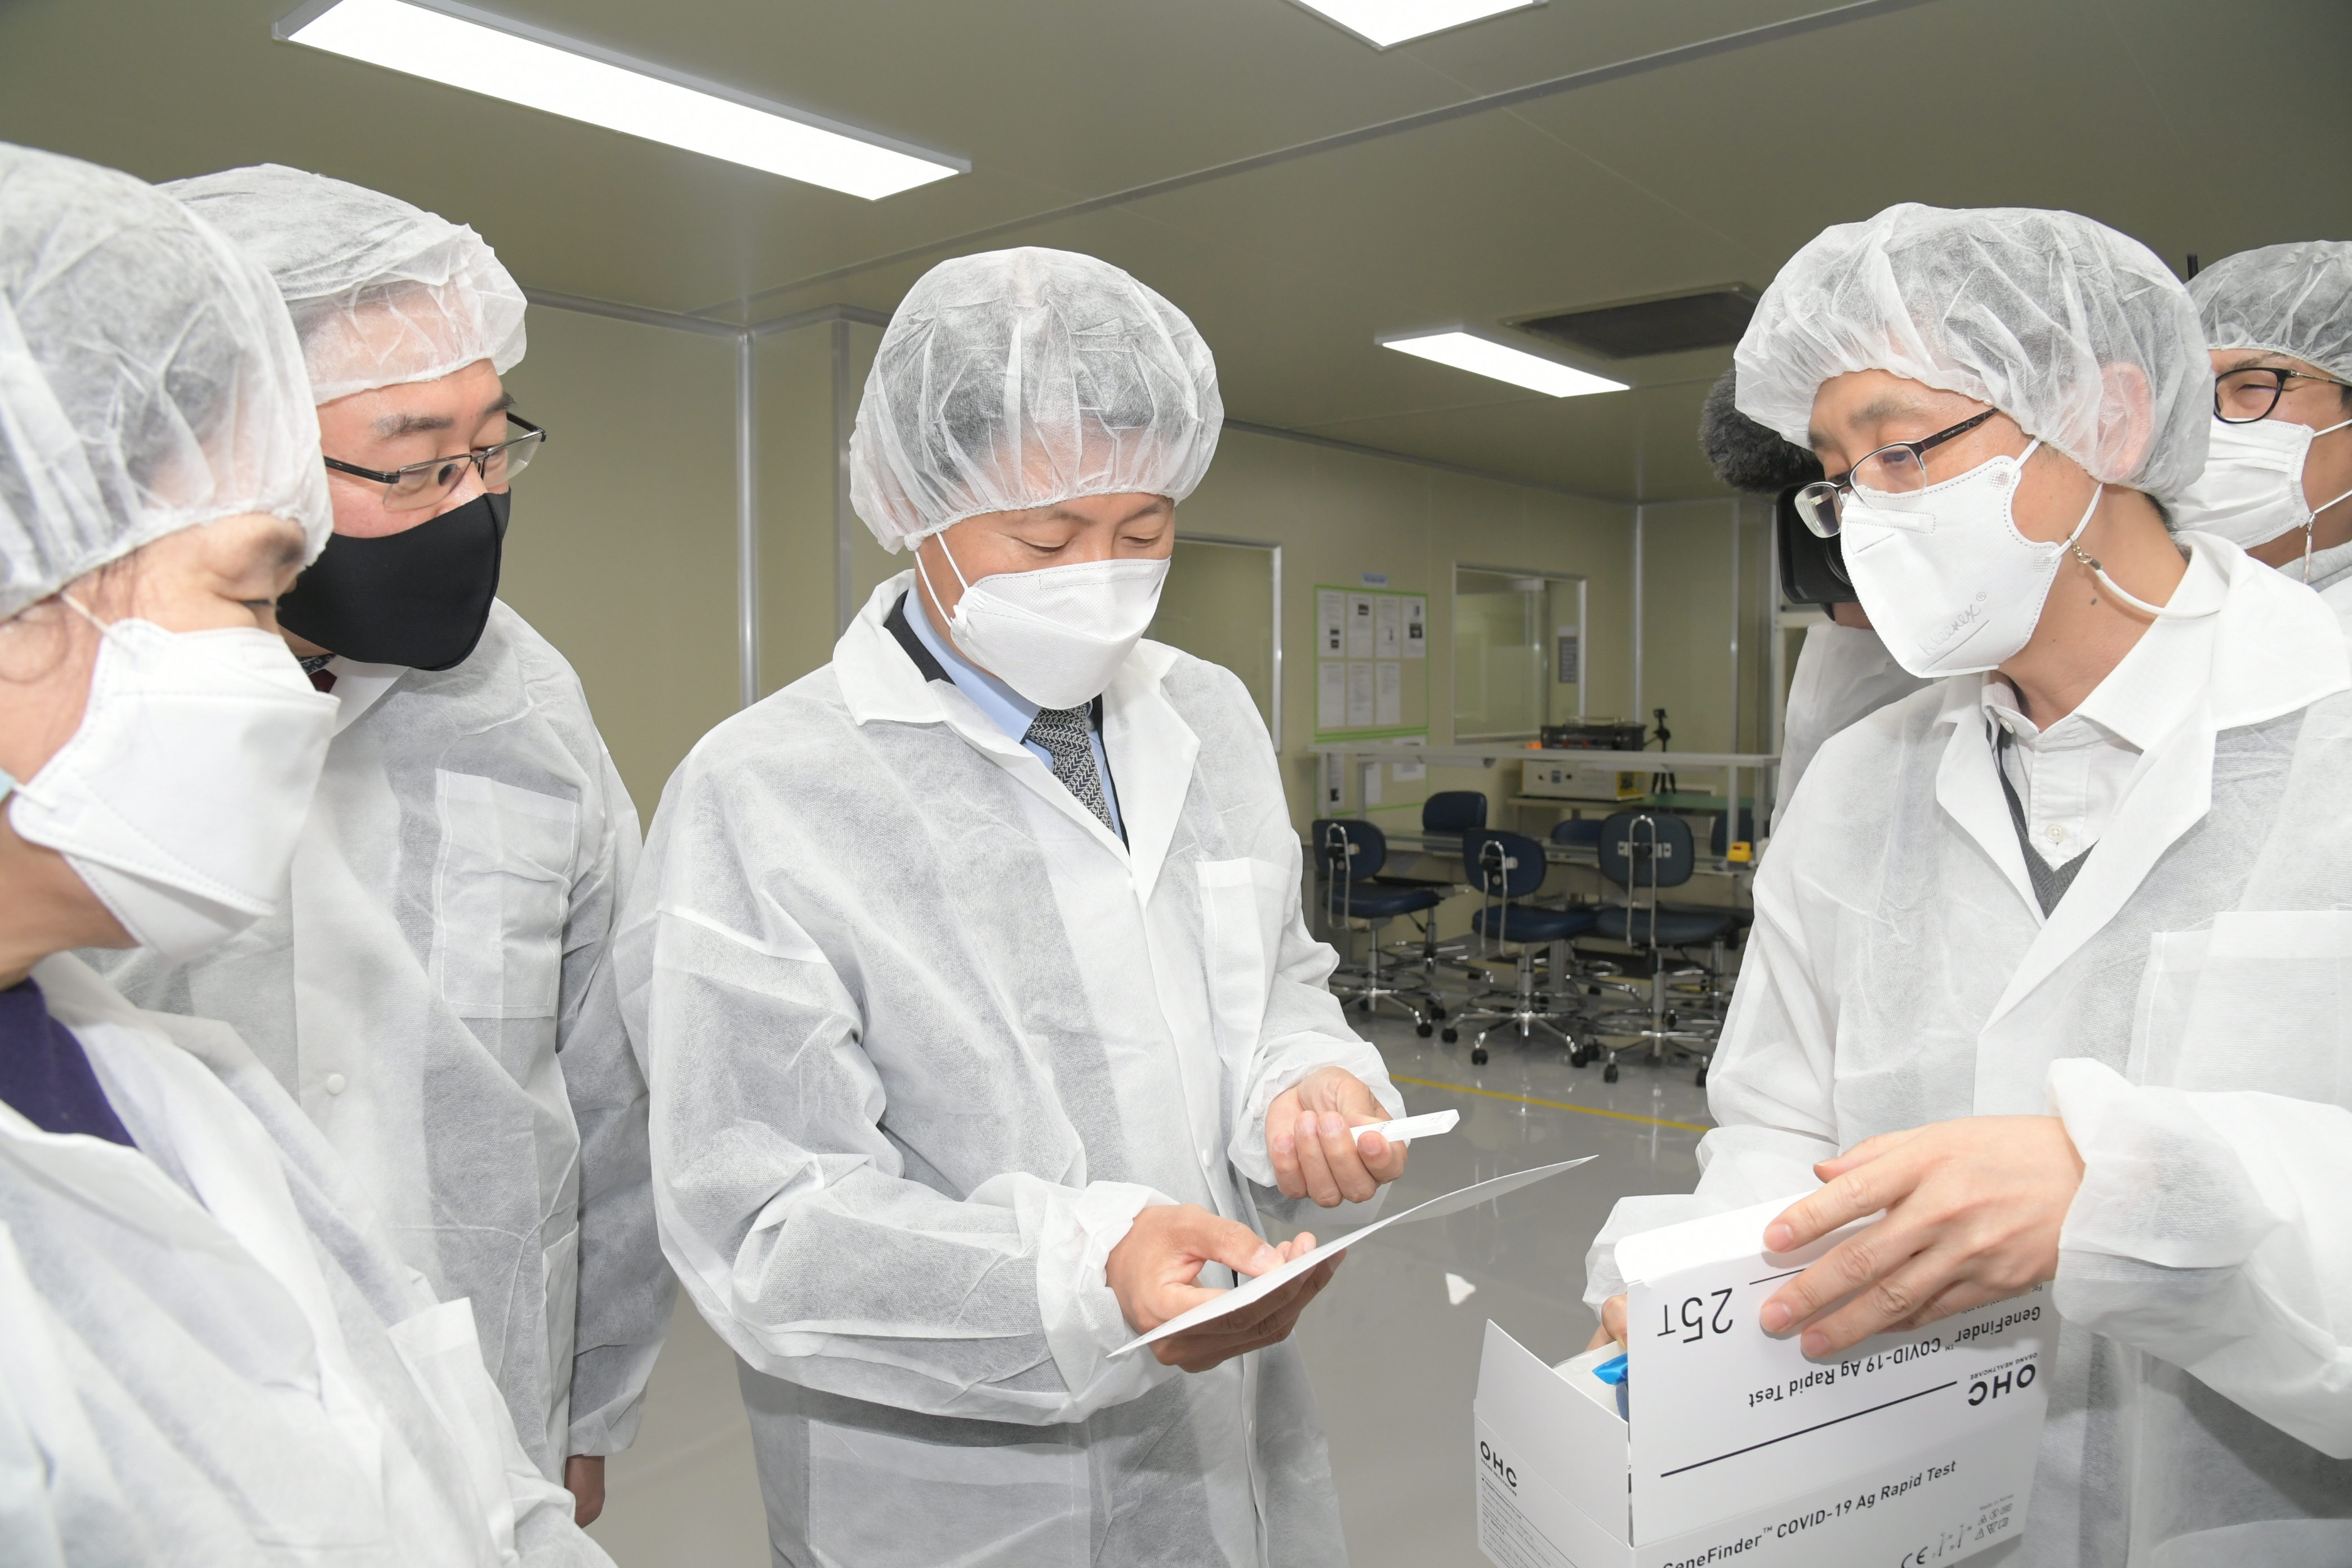 Photo News4 - [Dec. 10, 2020] A visit to the COVID-19 diagnostic reagent manufacturer